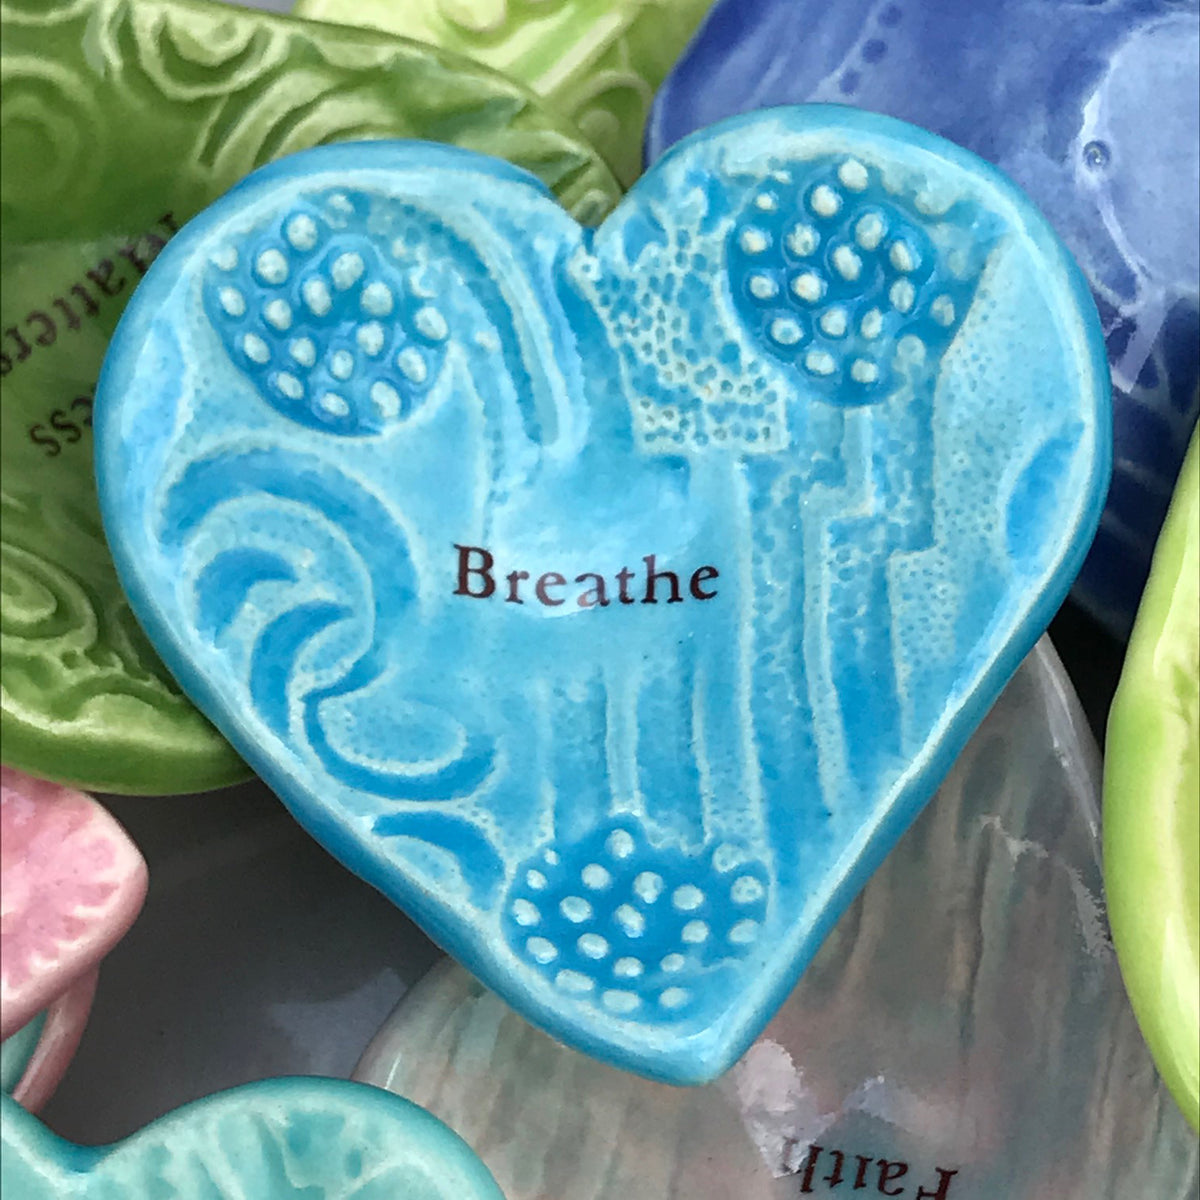 Giving Heart "Breathe"